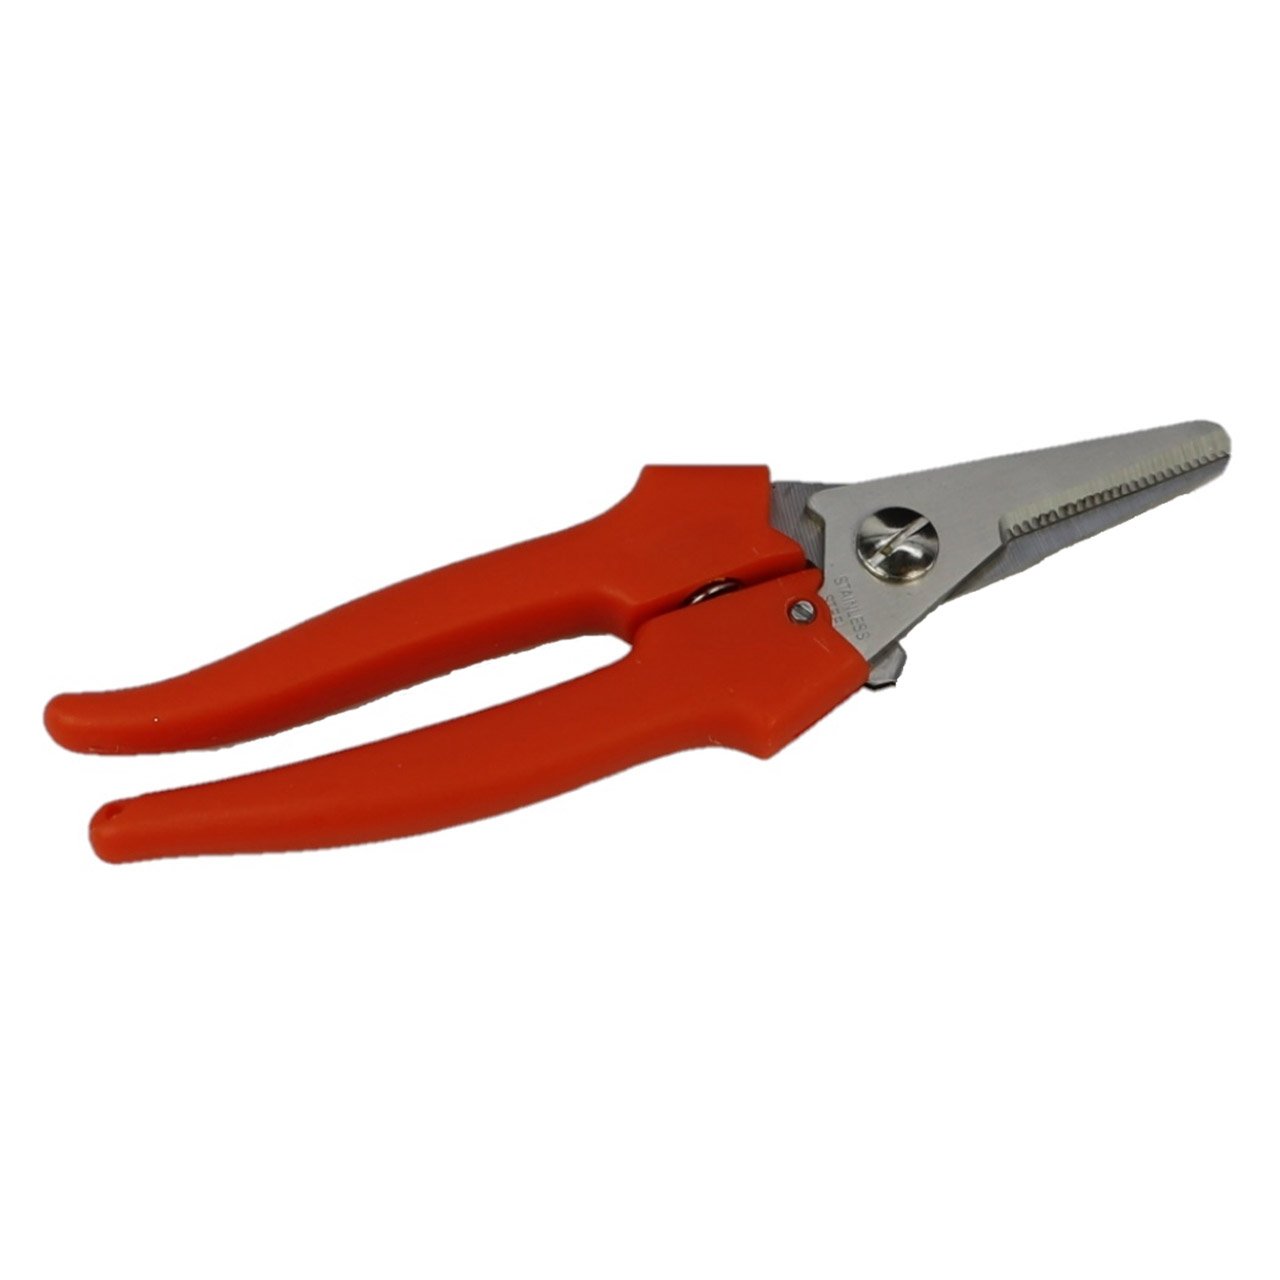 Metal florist scissors, red